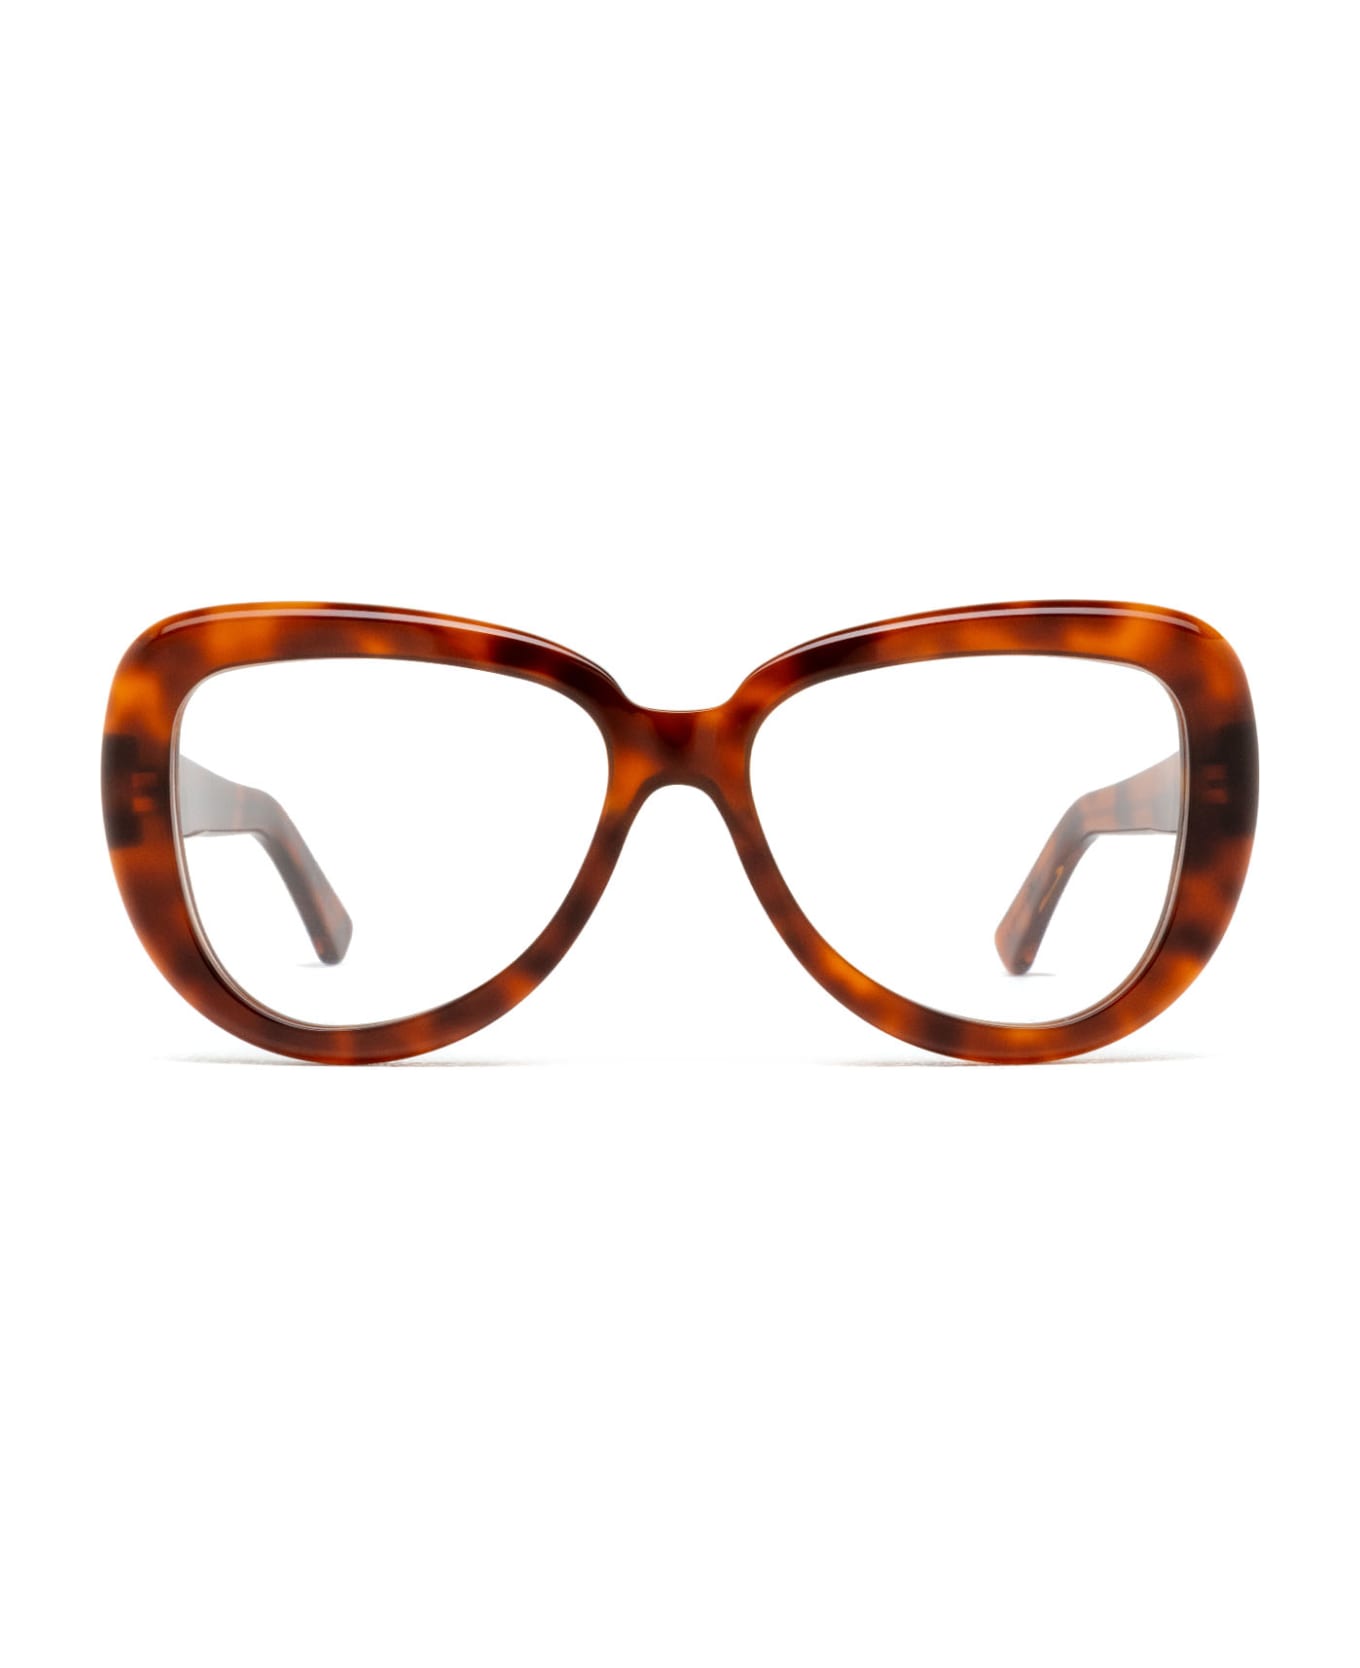 Marni Eyewear Elephant Island Opt Blonde Havana Glasses - Blonde Havana アイウェア